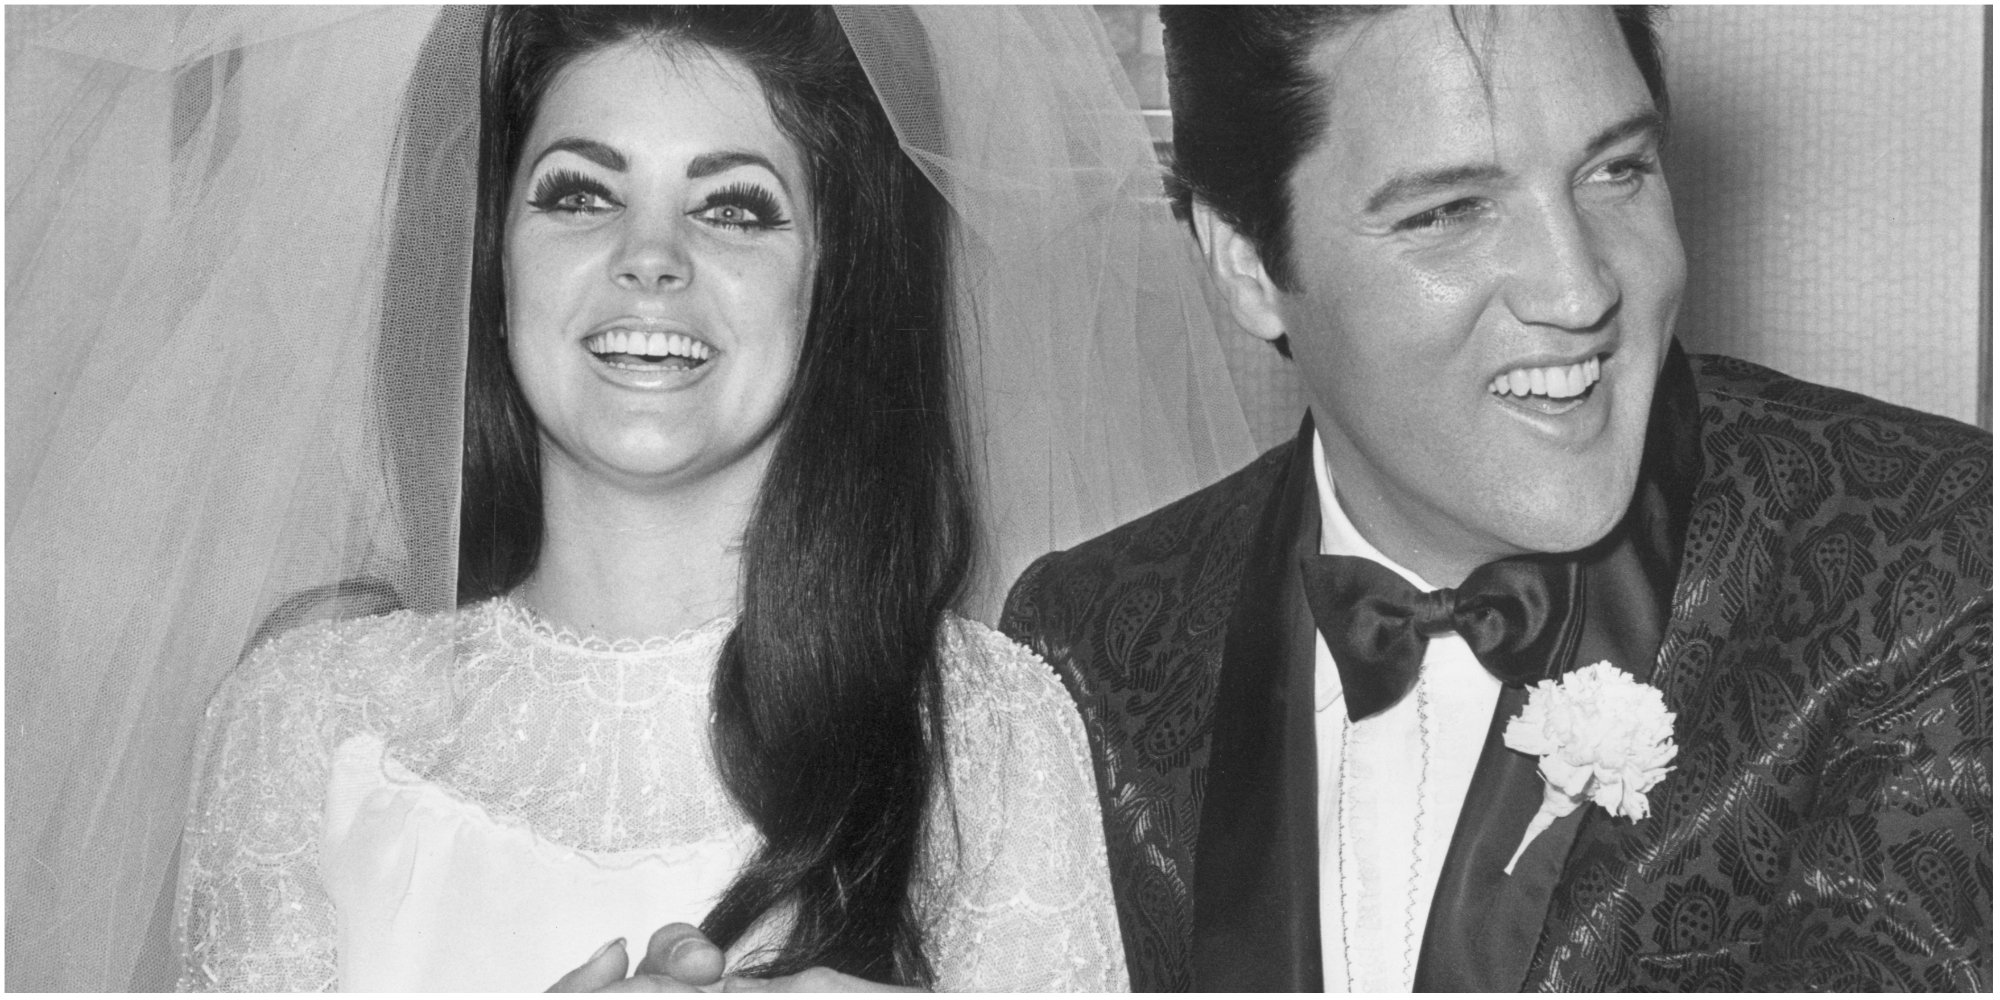 Priscilla and Elvis Presley pose on their wedding day in 1967 in Las Vegas, Nevada.